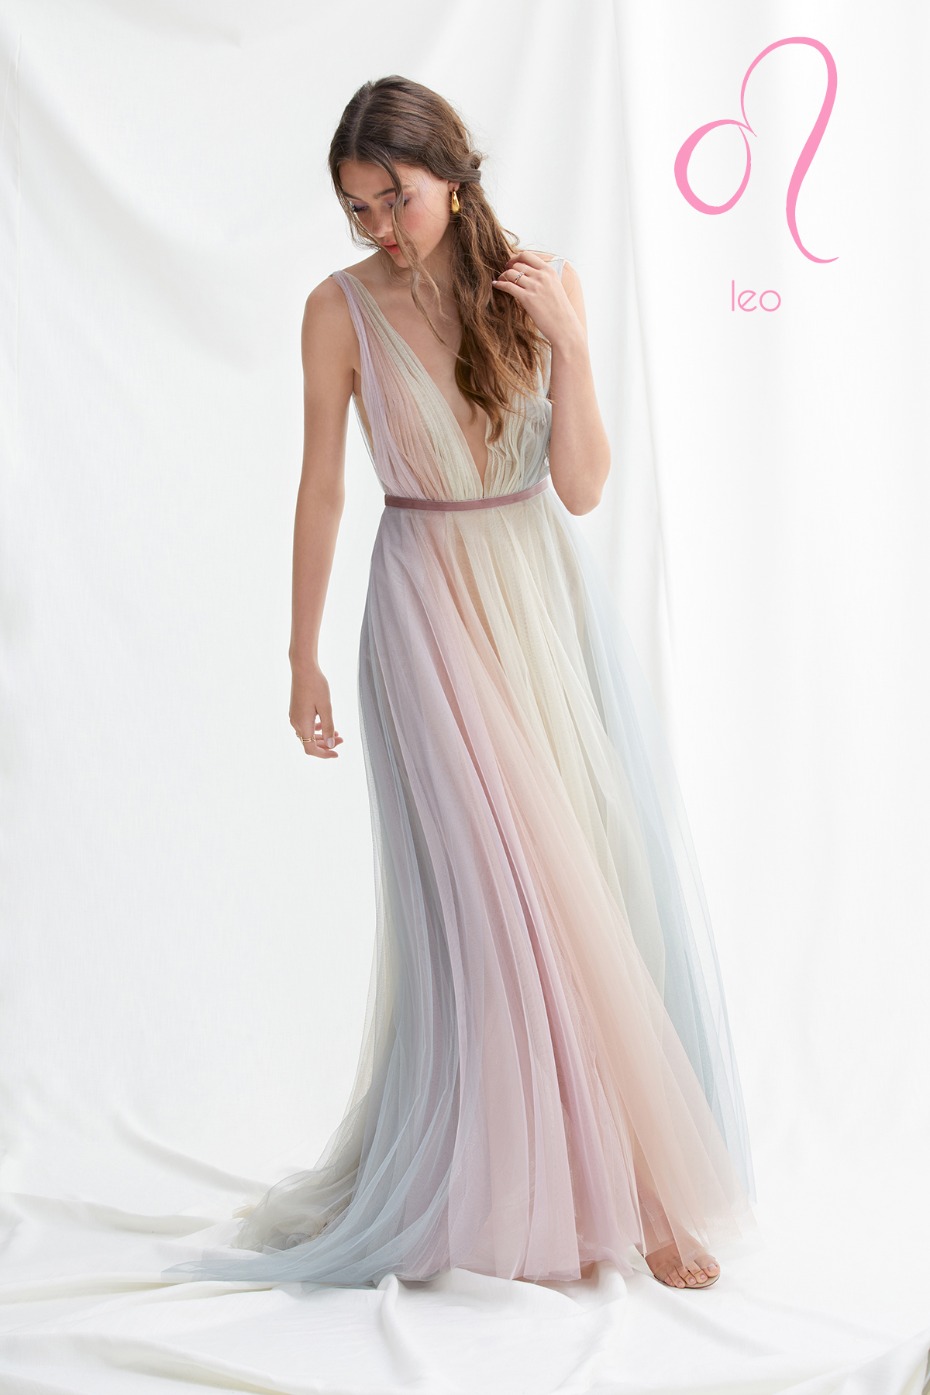 pastel rainbow tulle dress for the Leo Zodiac